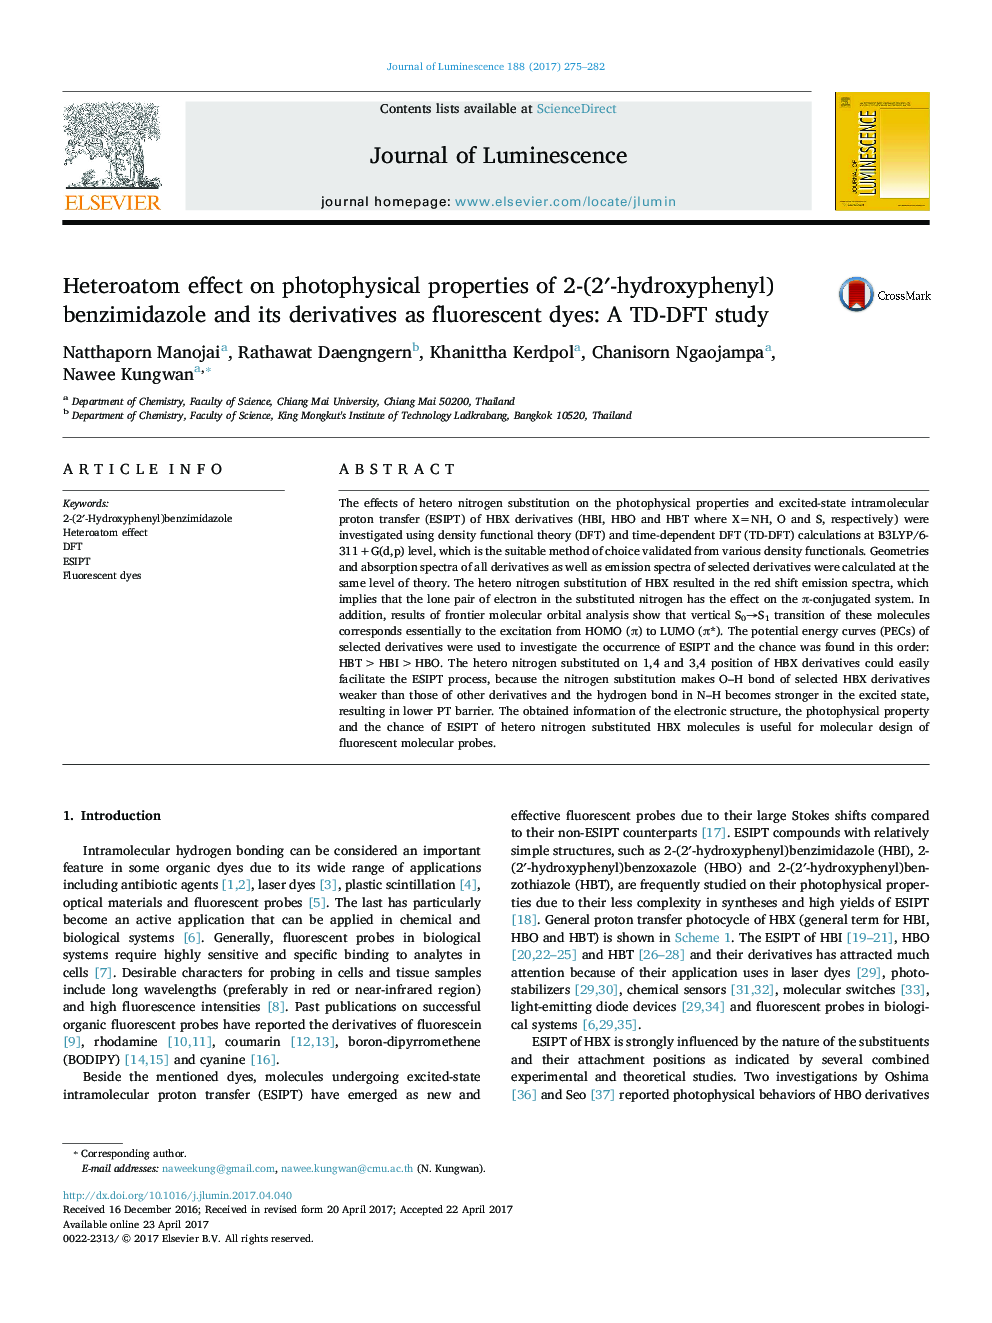 Heteroatom effect on photophysical properties of 2-(2â²-hydroxyphenyl)benzimidazole and its derivatives as fluorescent dyes: A TD-DFT study